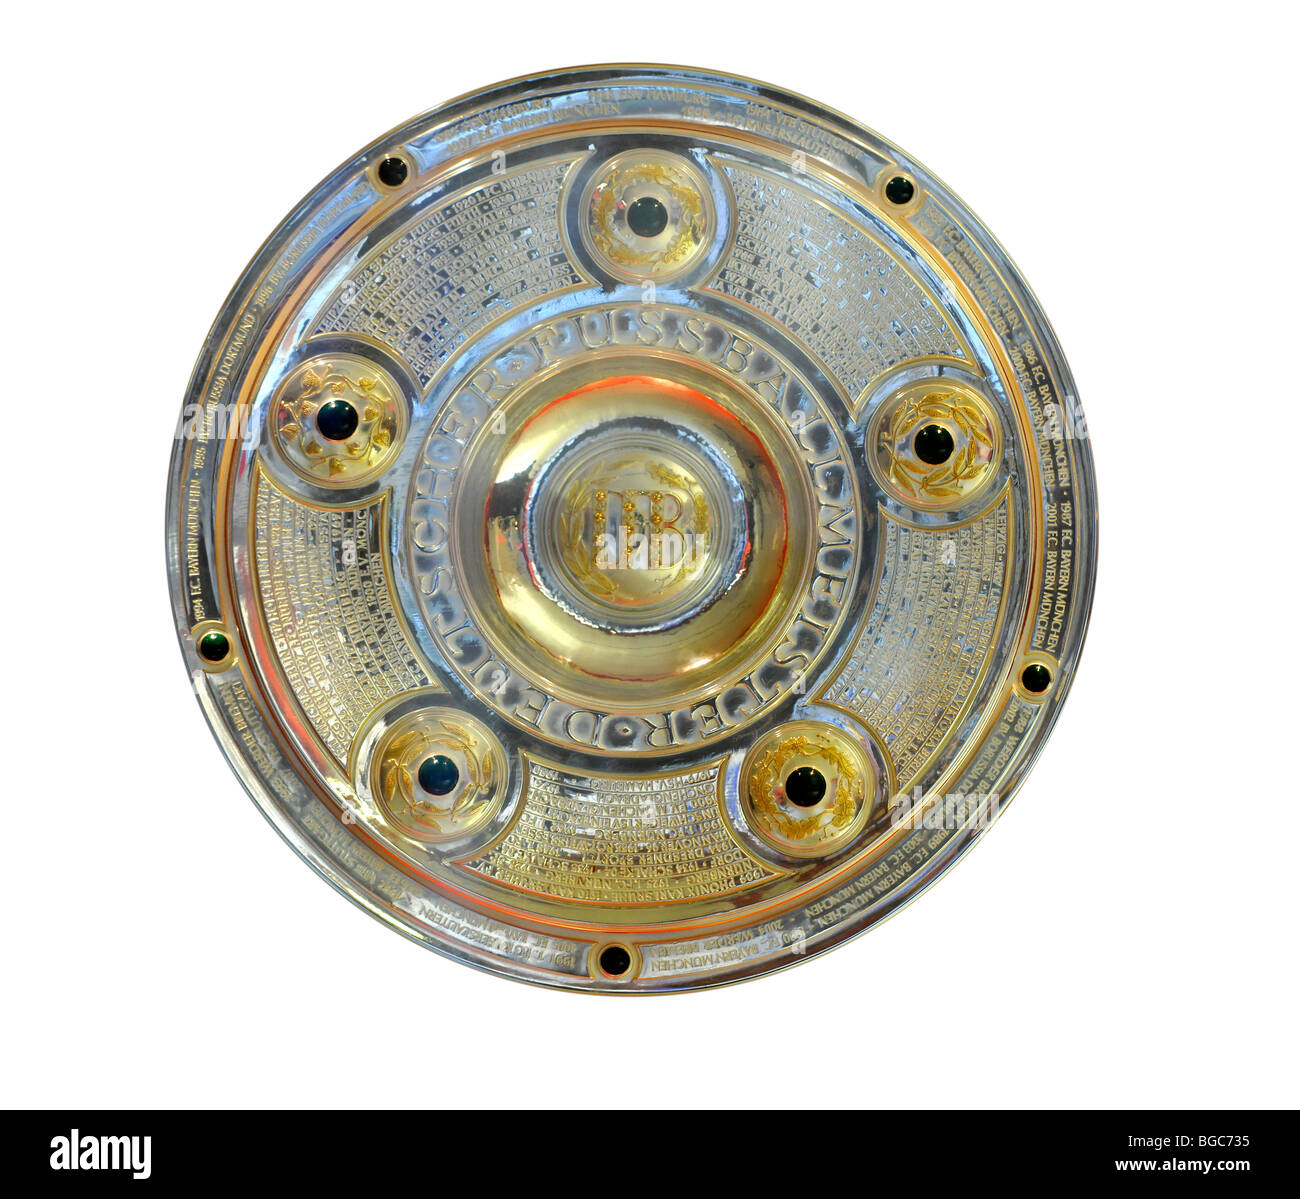 Meisterschale, Deutsche Bundesliga German football league championship trophy, cut-out Stock Photo